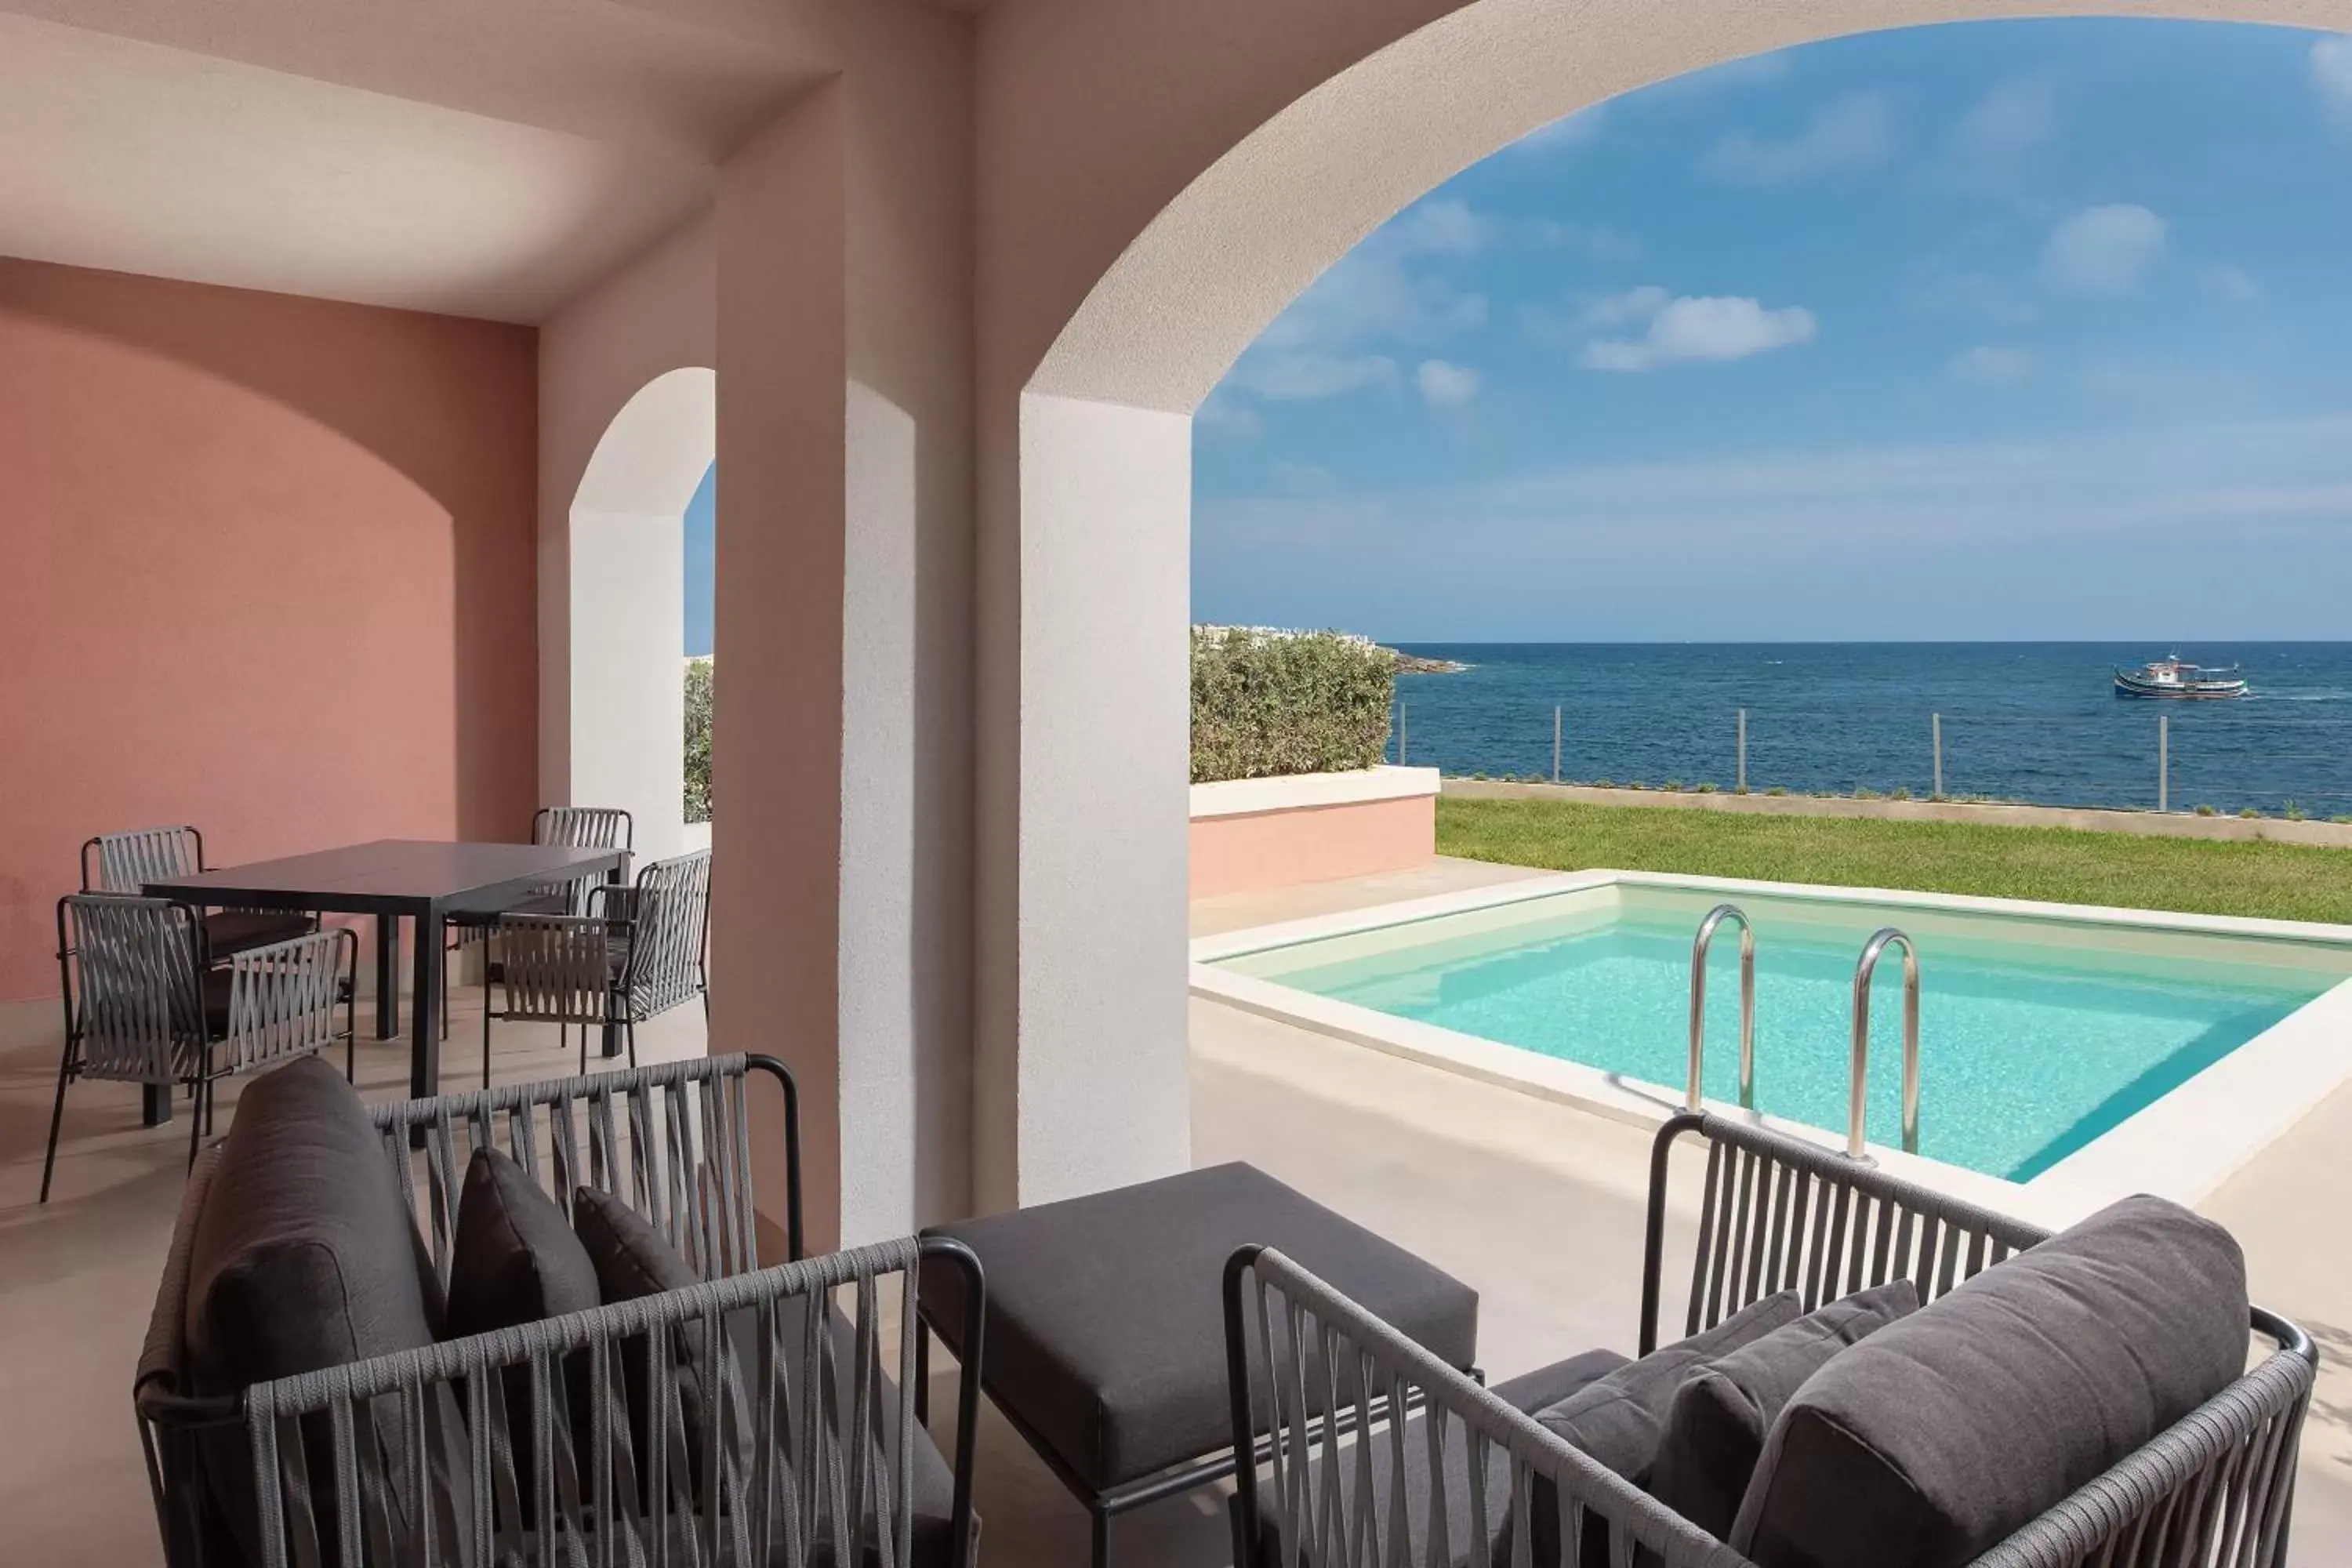 Photo of the whole room, Pool View in The Westin Dragonara Resort, Malta